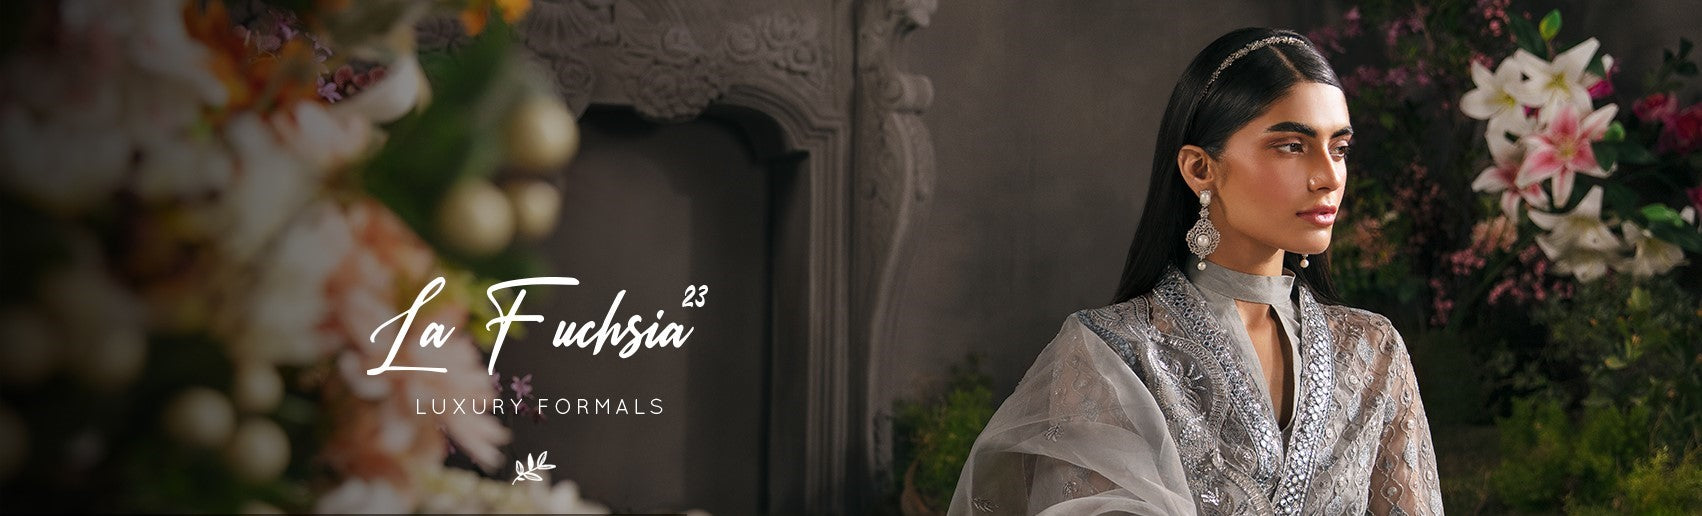 Afrozeh La Fuchsia Luxury Formals Shahana Collection UK